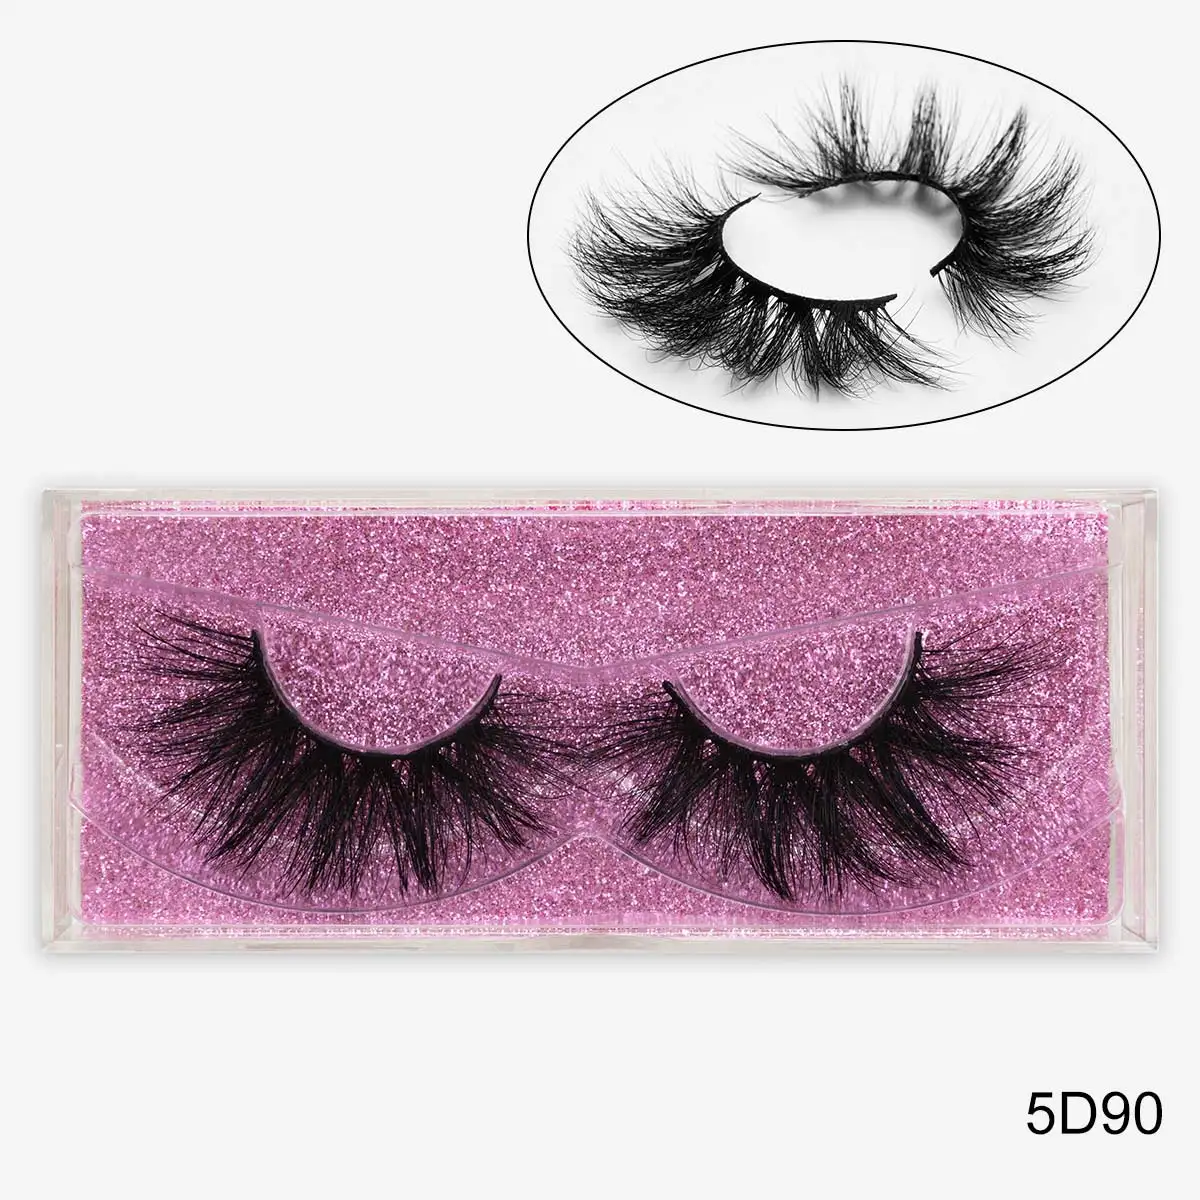 SEXYSHEEP Mink Lashes 3D Mink Eyelashes Cruelty free Lashes Handmade Reusable Natural Eyelashes False Lashes Makeup - Цвет: 5D90